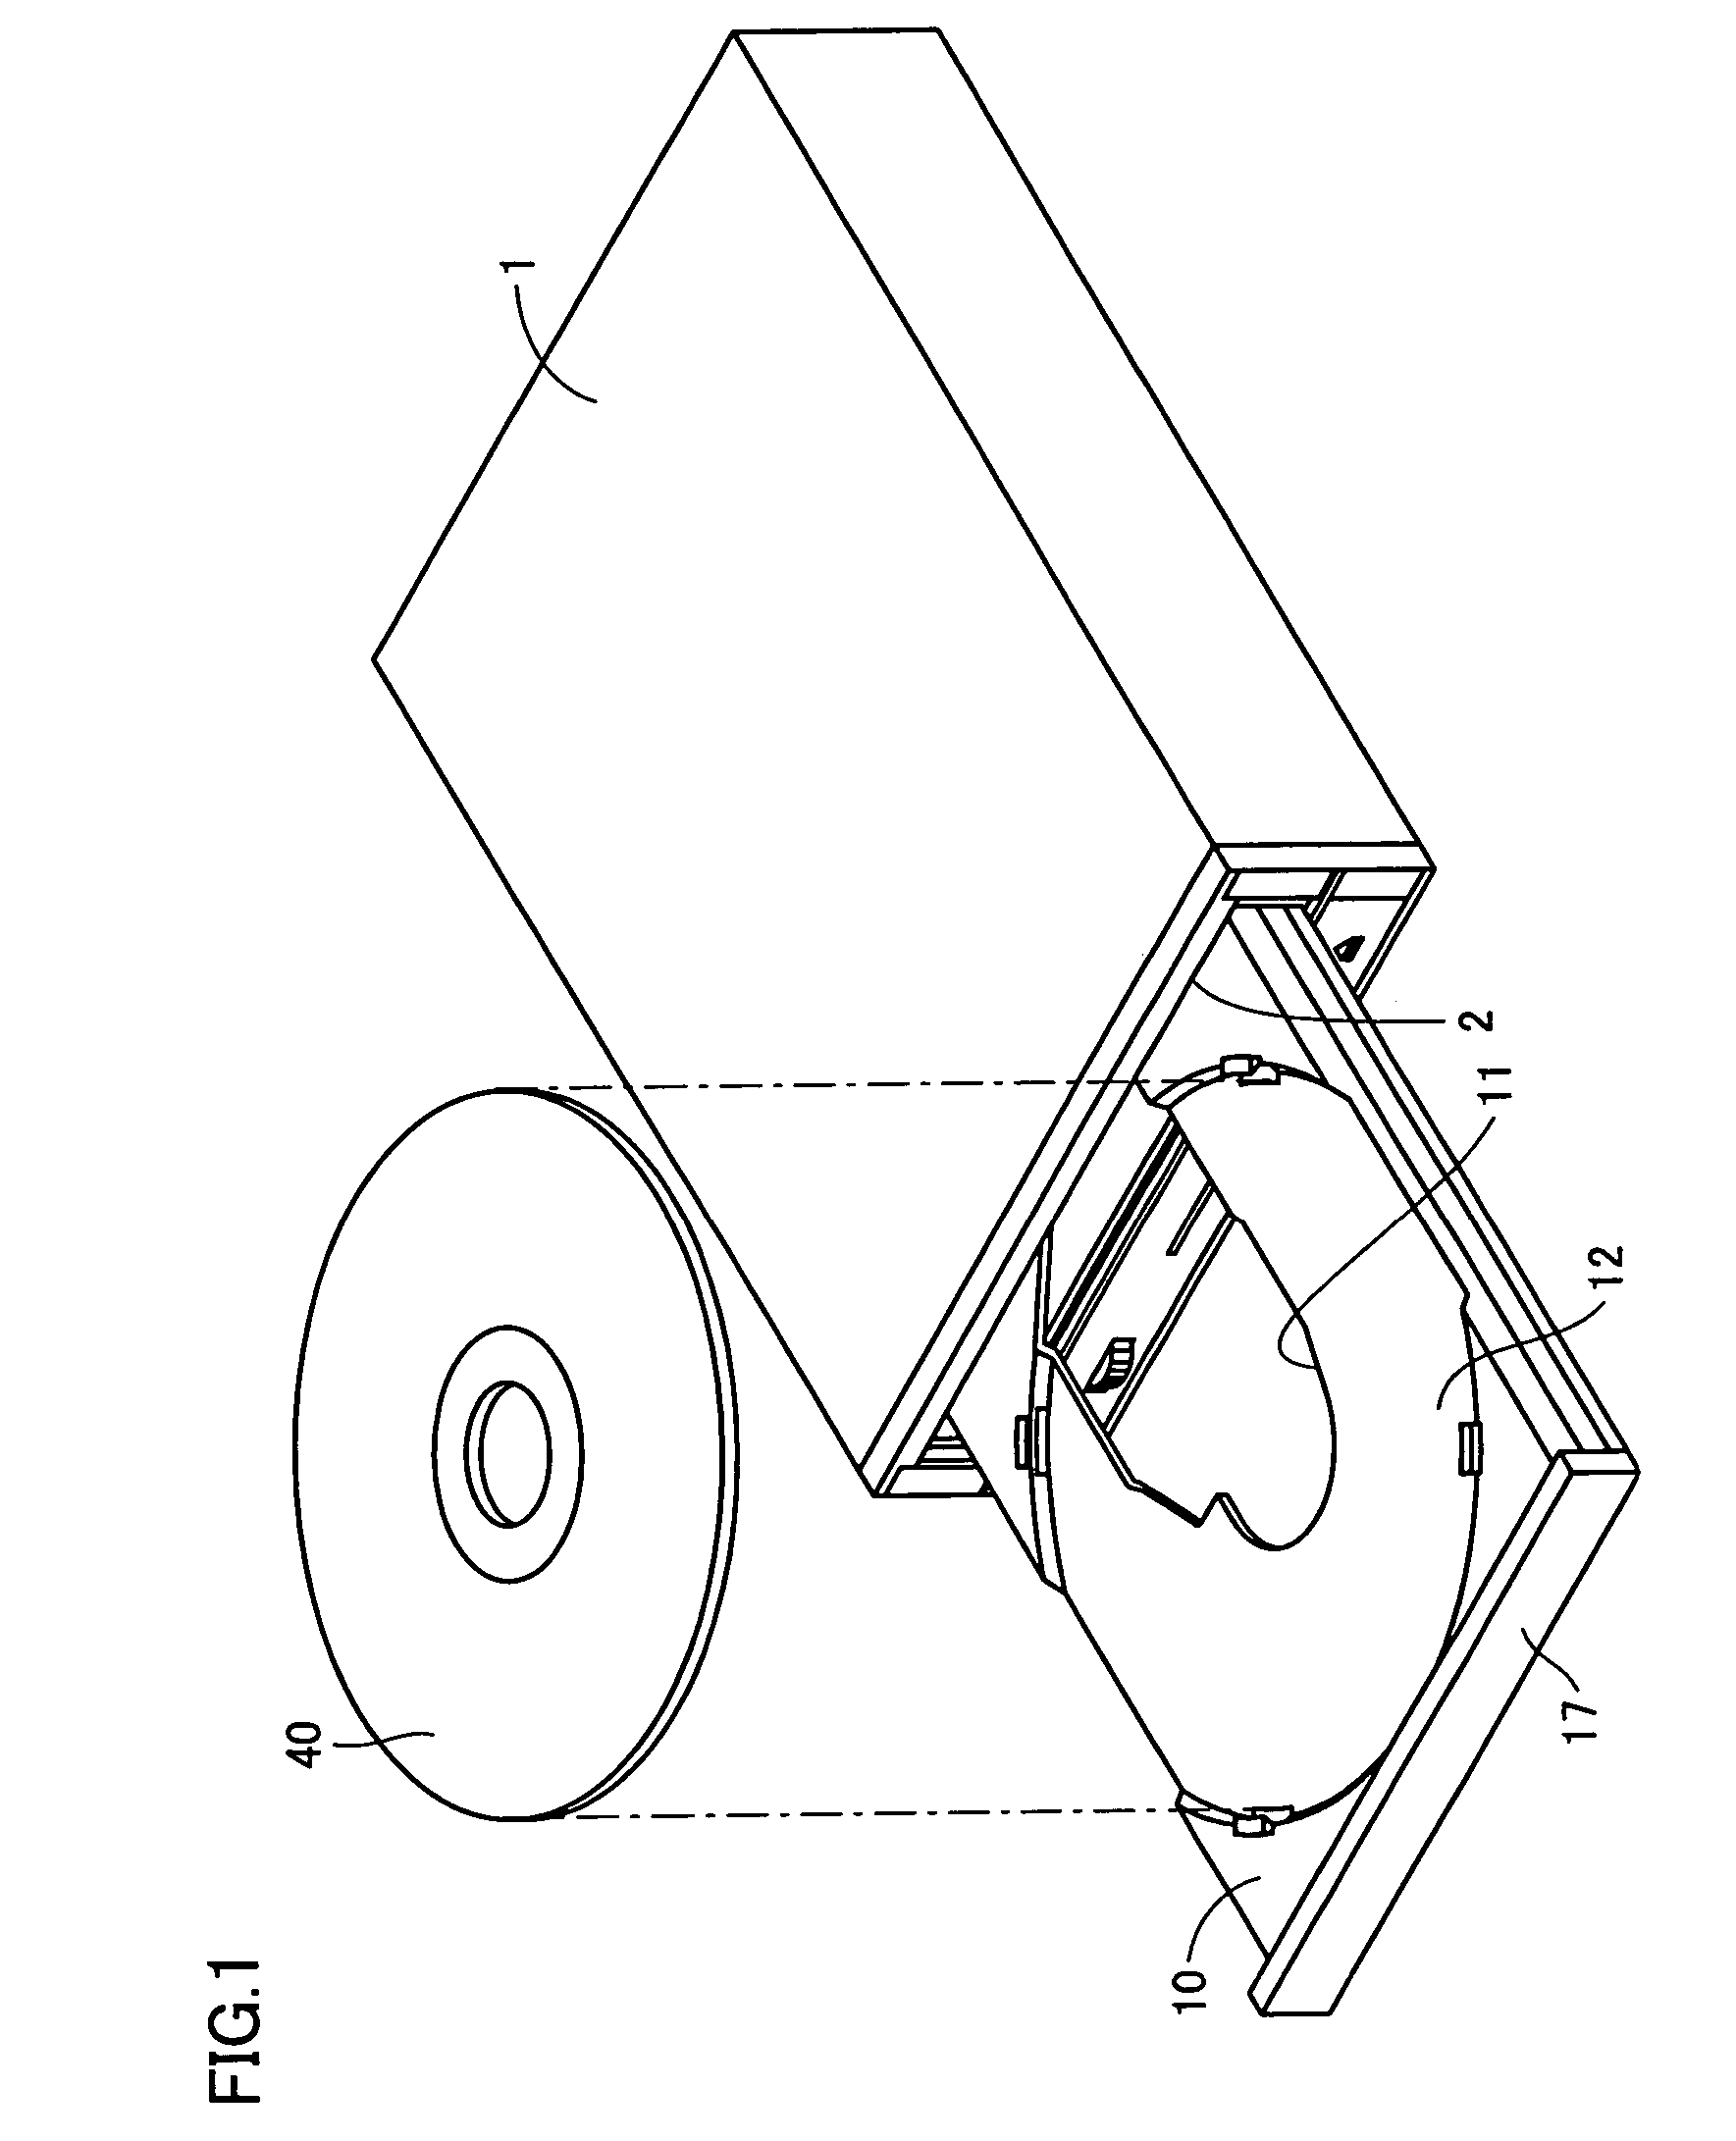 Optical disc drive apparatus